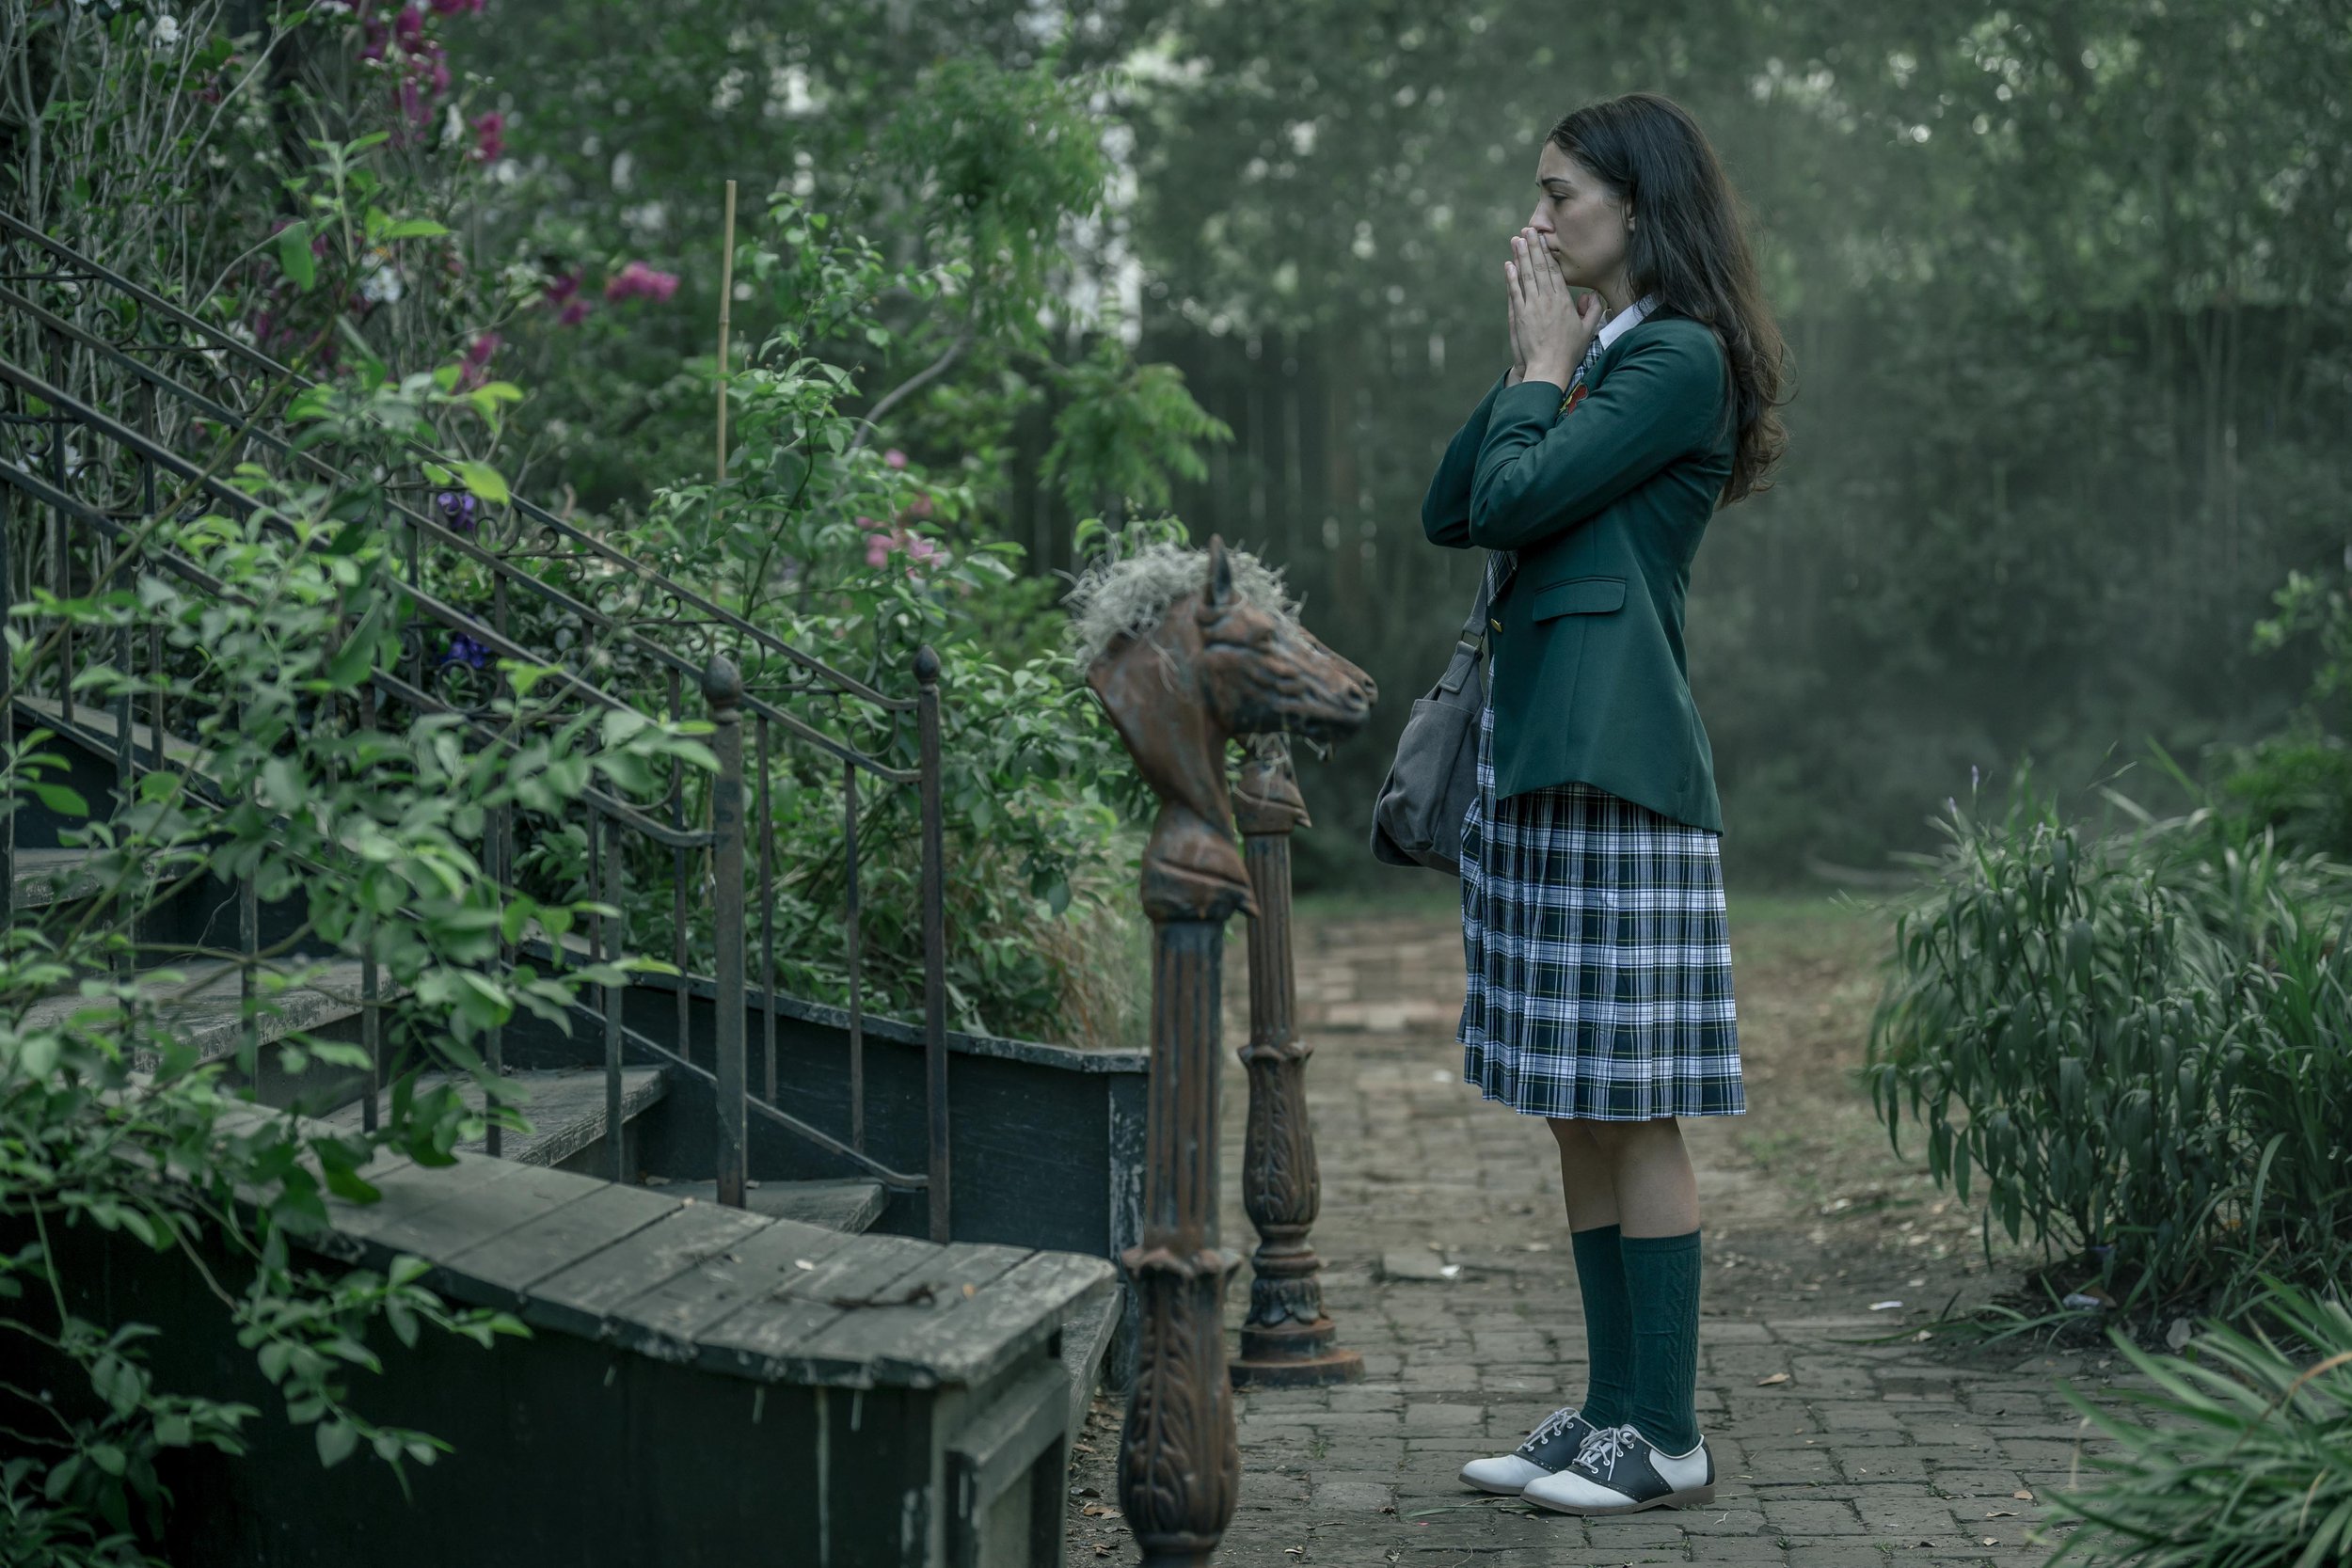  Cameron Jade Inman as Young Deirdre Mayfair - Mayfair Witches _ Season 1, Episode 1 - Photo Credit: Alfonso Bresciani/AMC 